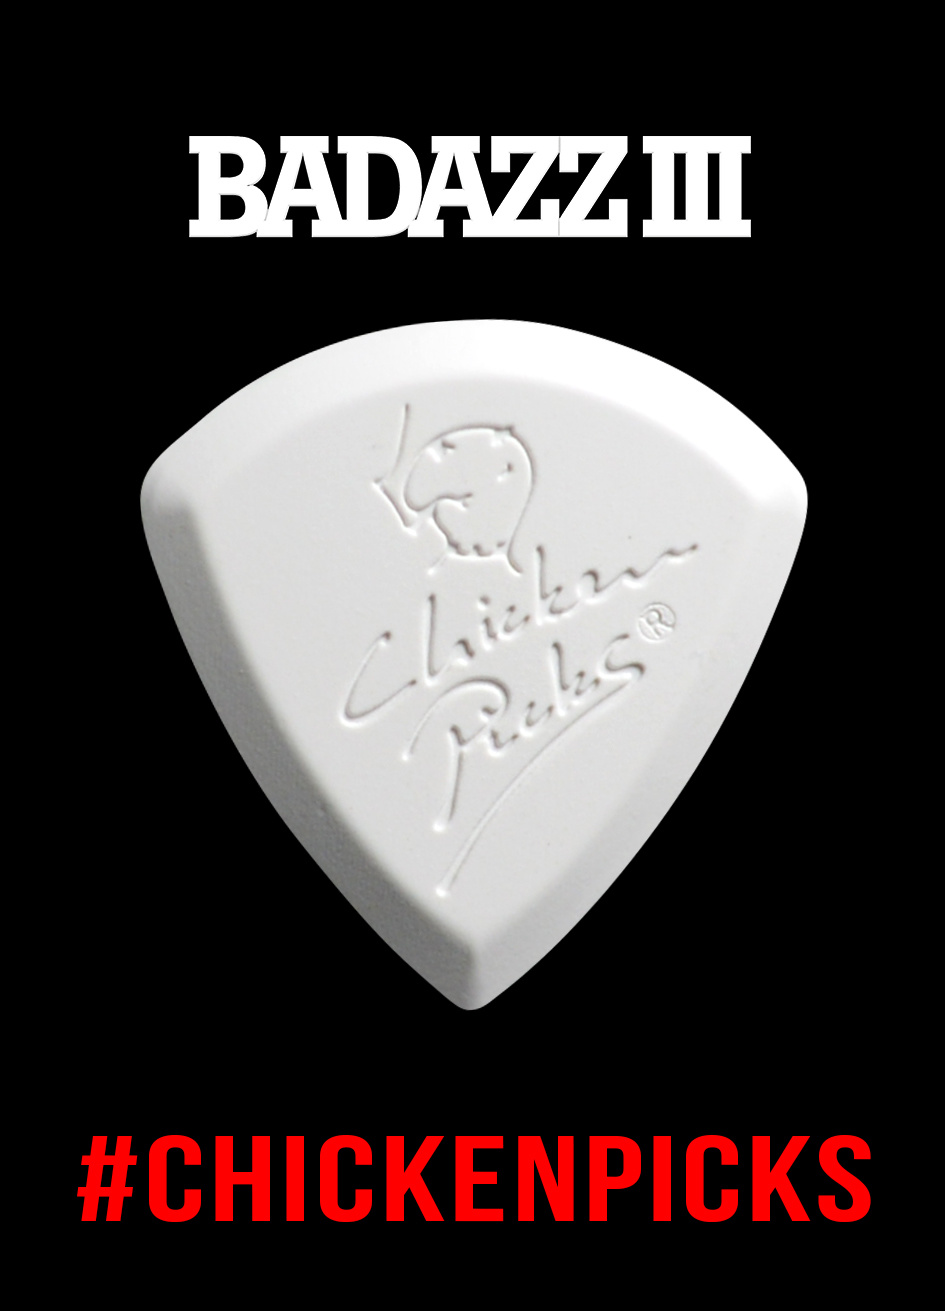 ChickenPicks 1x "Badazz III" 2.5mm (Jazz)- Ultimate tone, performance, control (Chicken Picks)